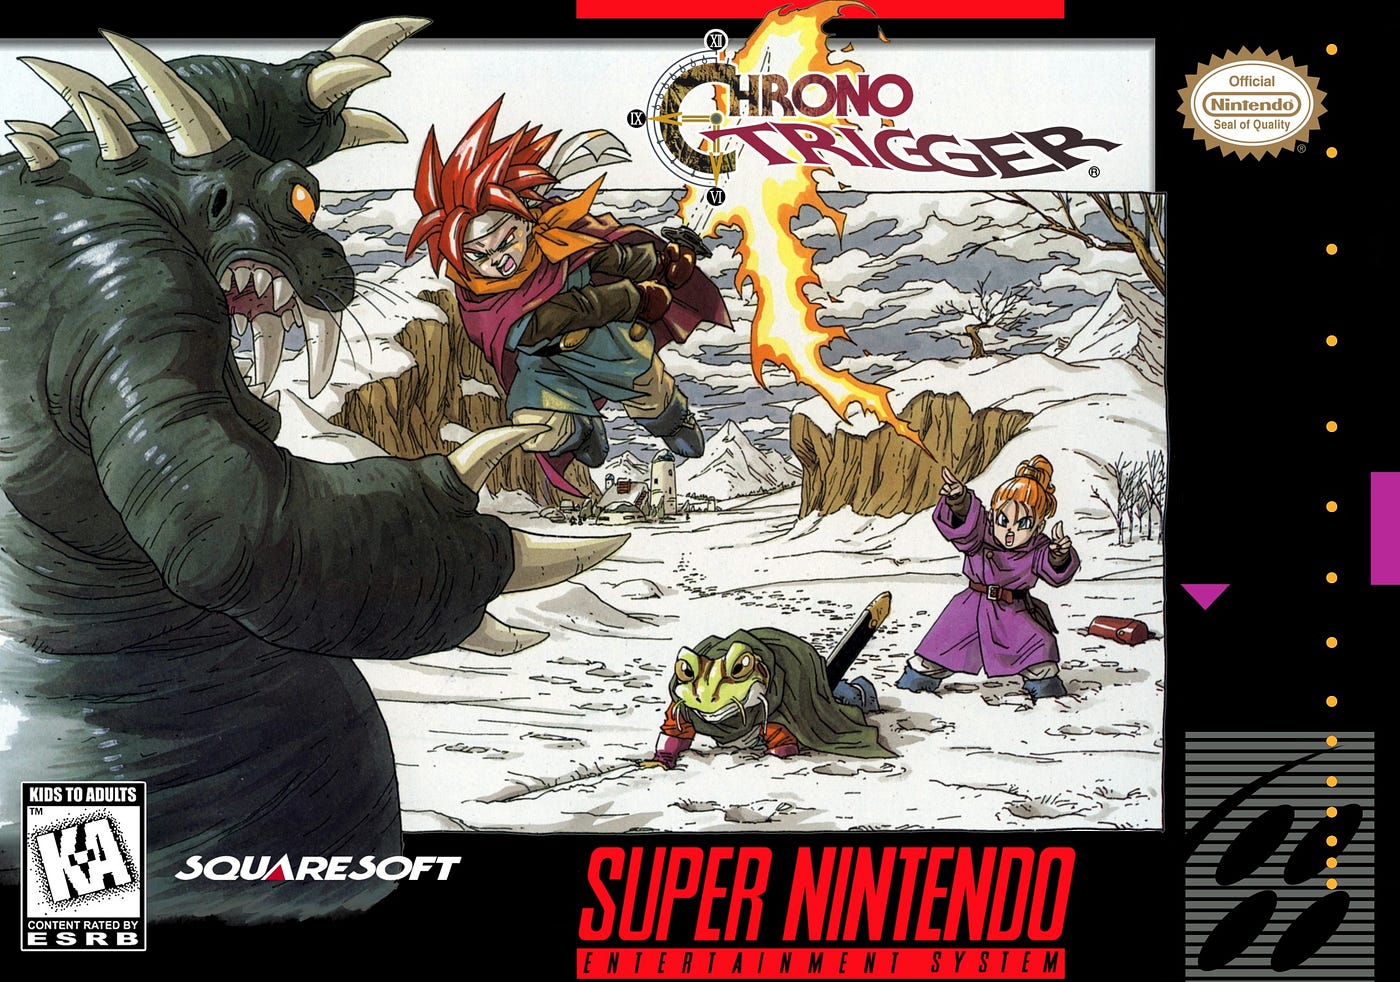 Chrono Trigger (video game, JRPG, time travel, high fantasy, turn